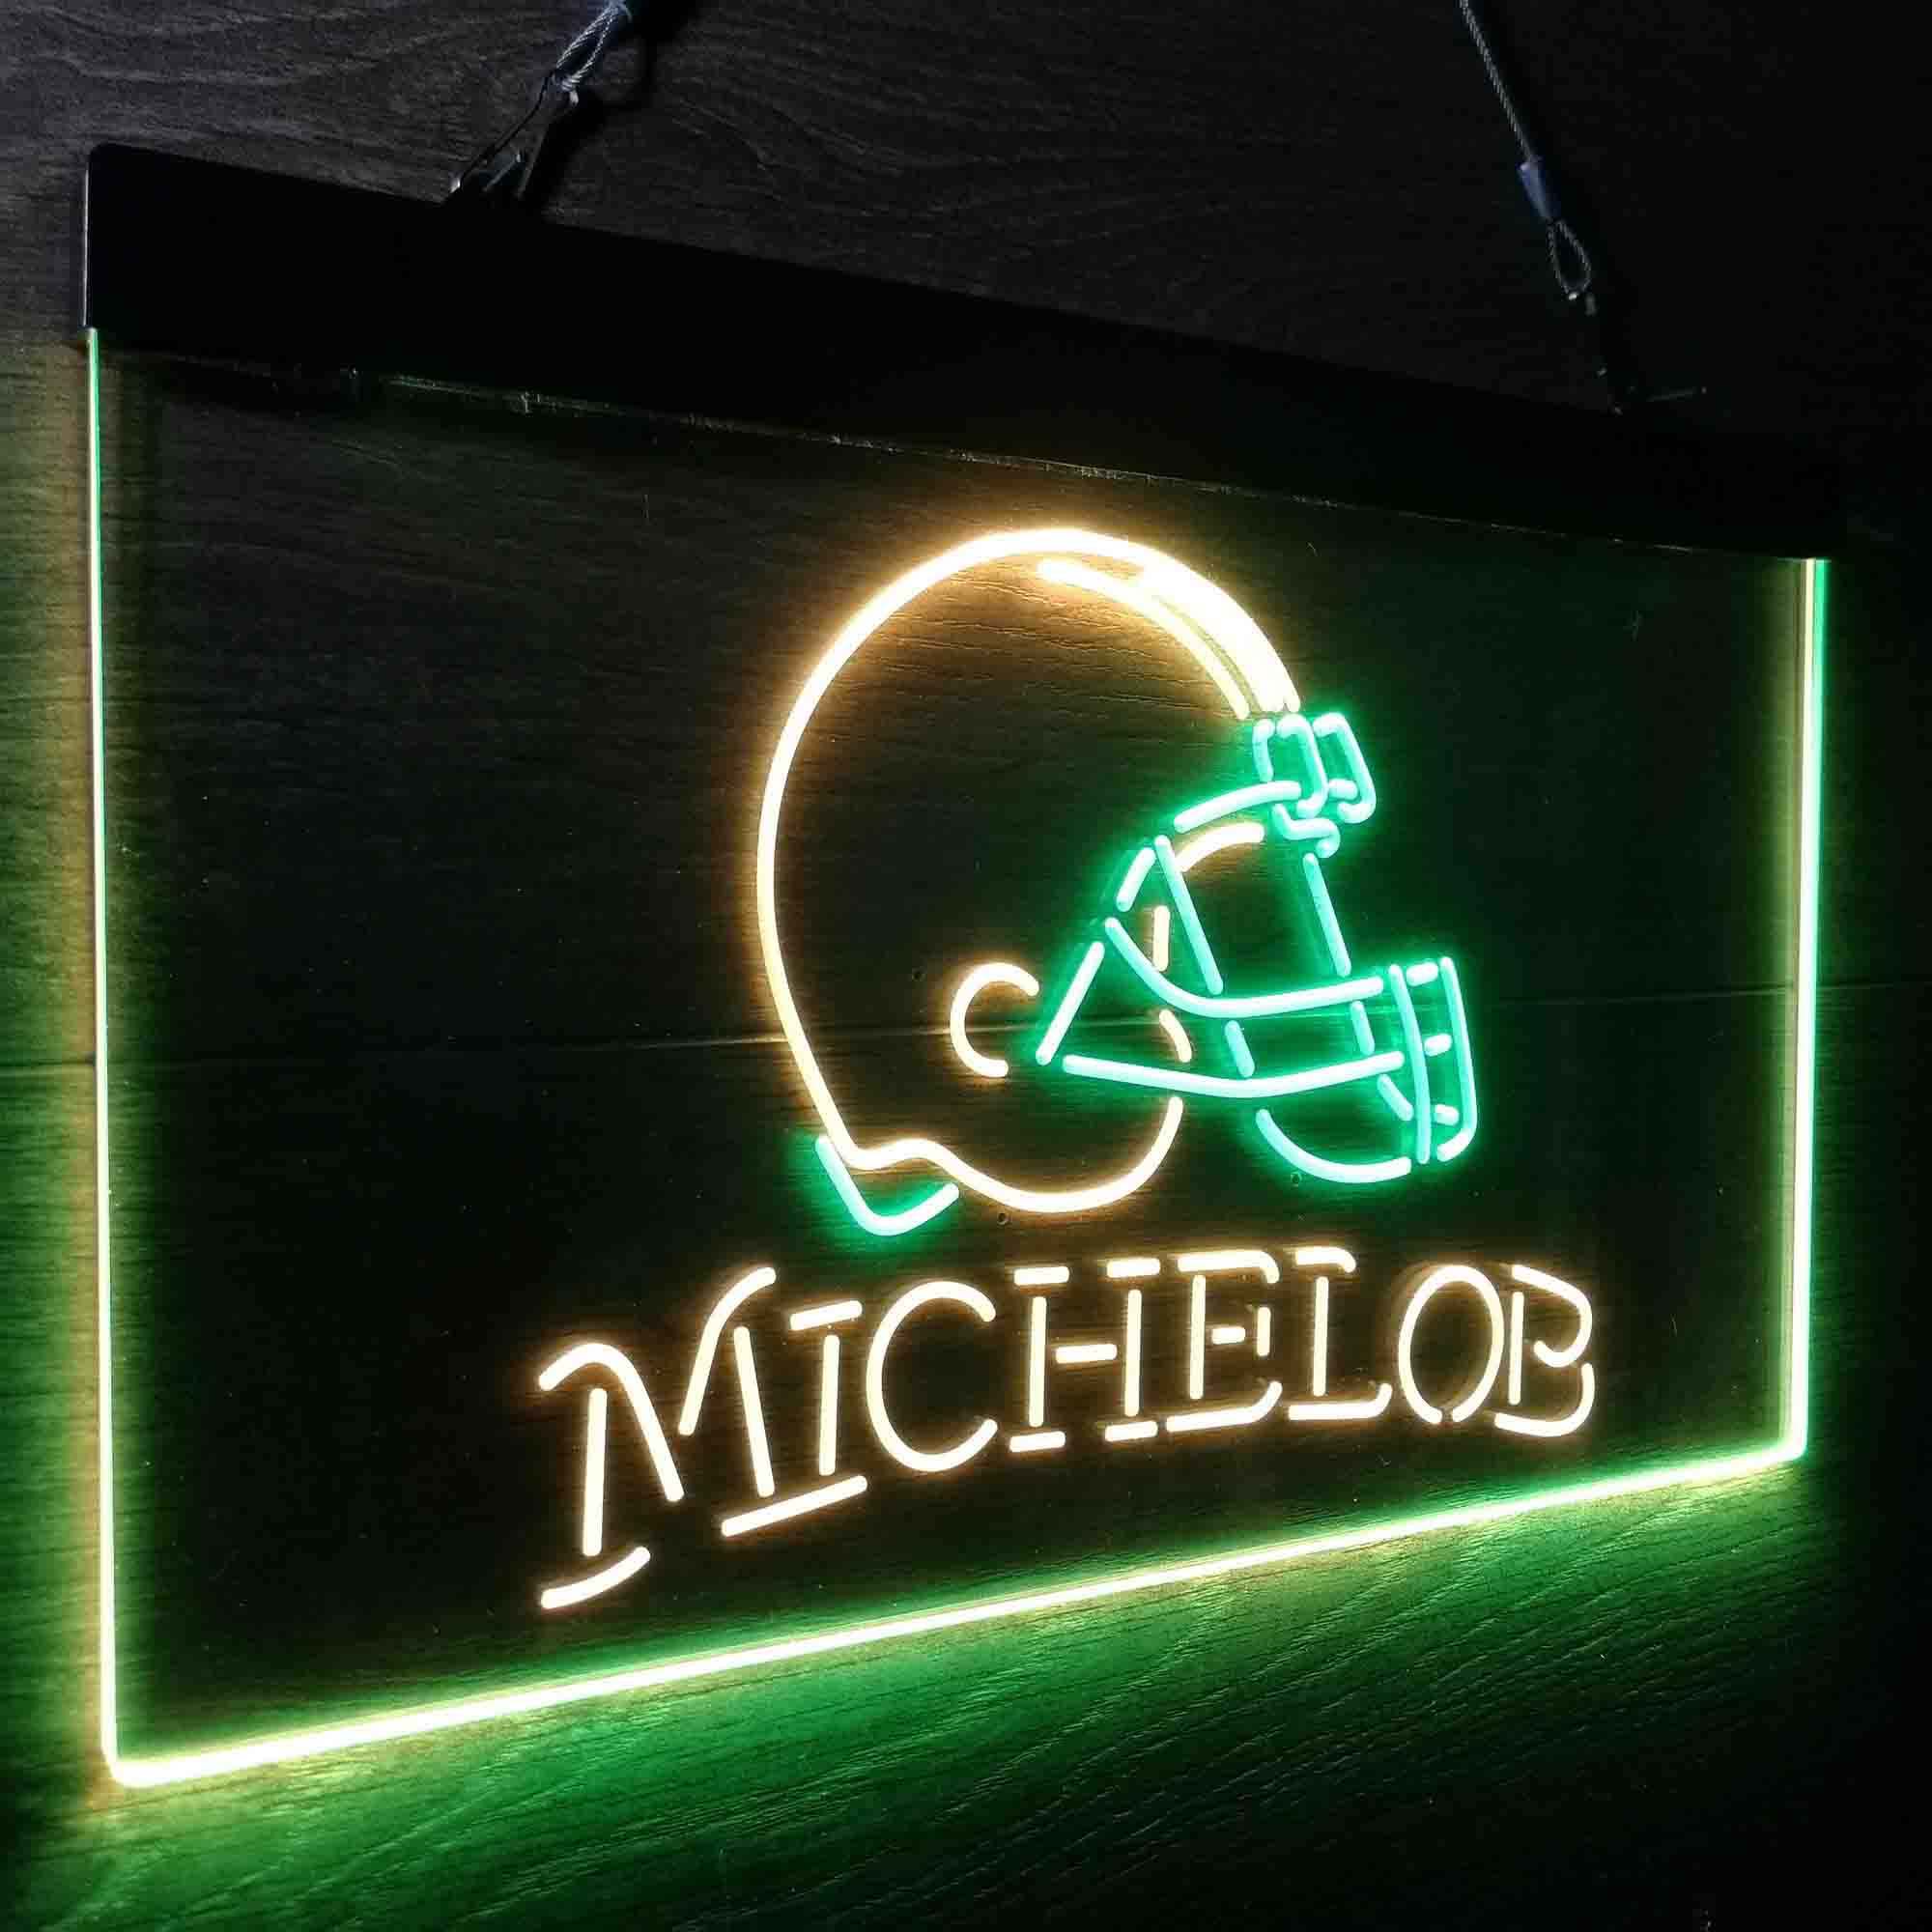 Michelob Bar Cleveland Browns Est. 1946 Neon-Like LED Sign